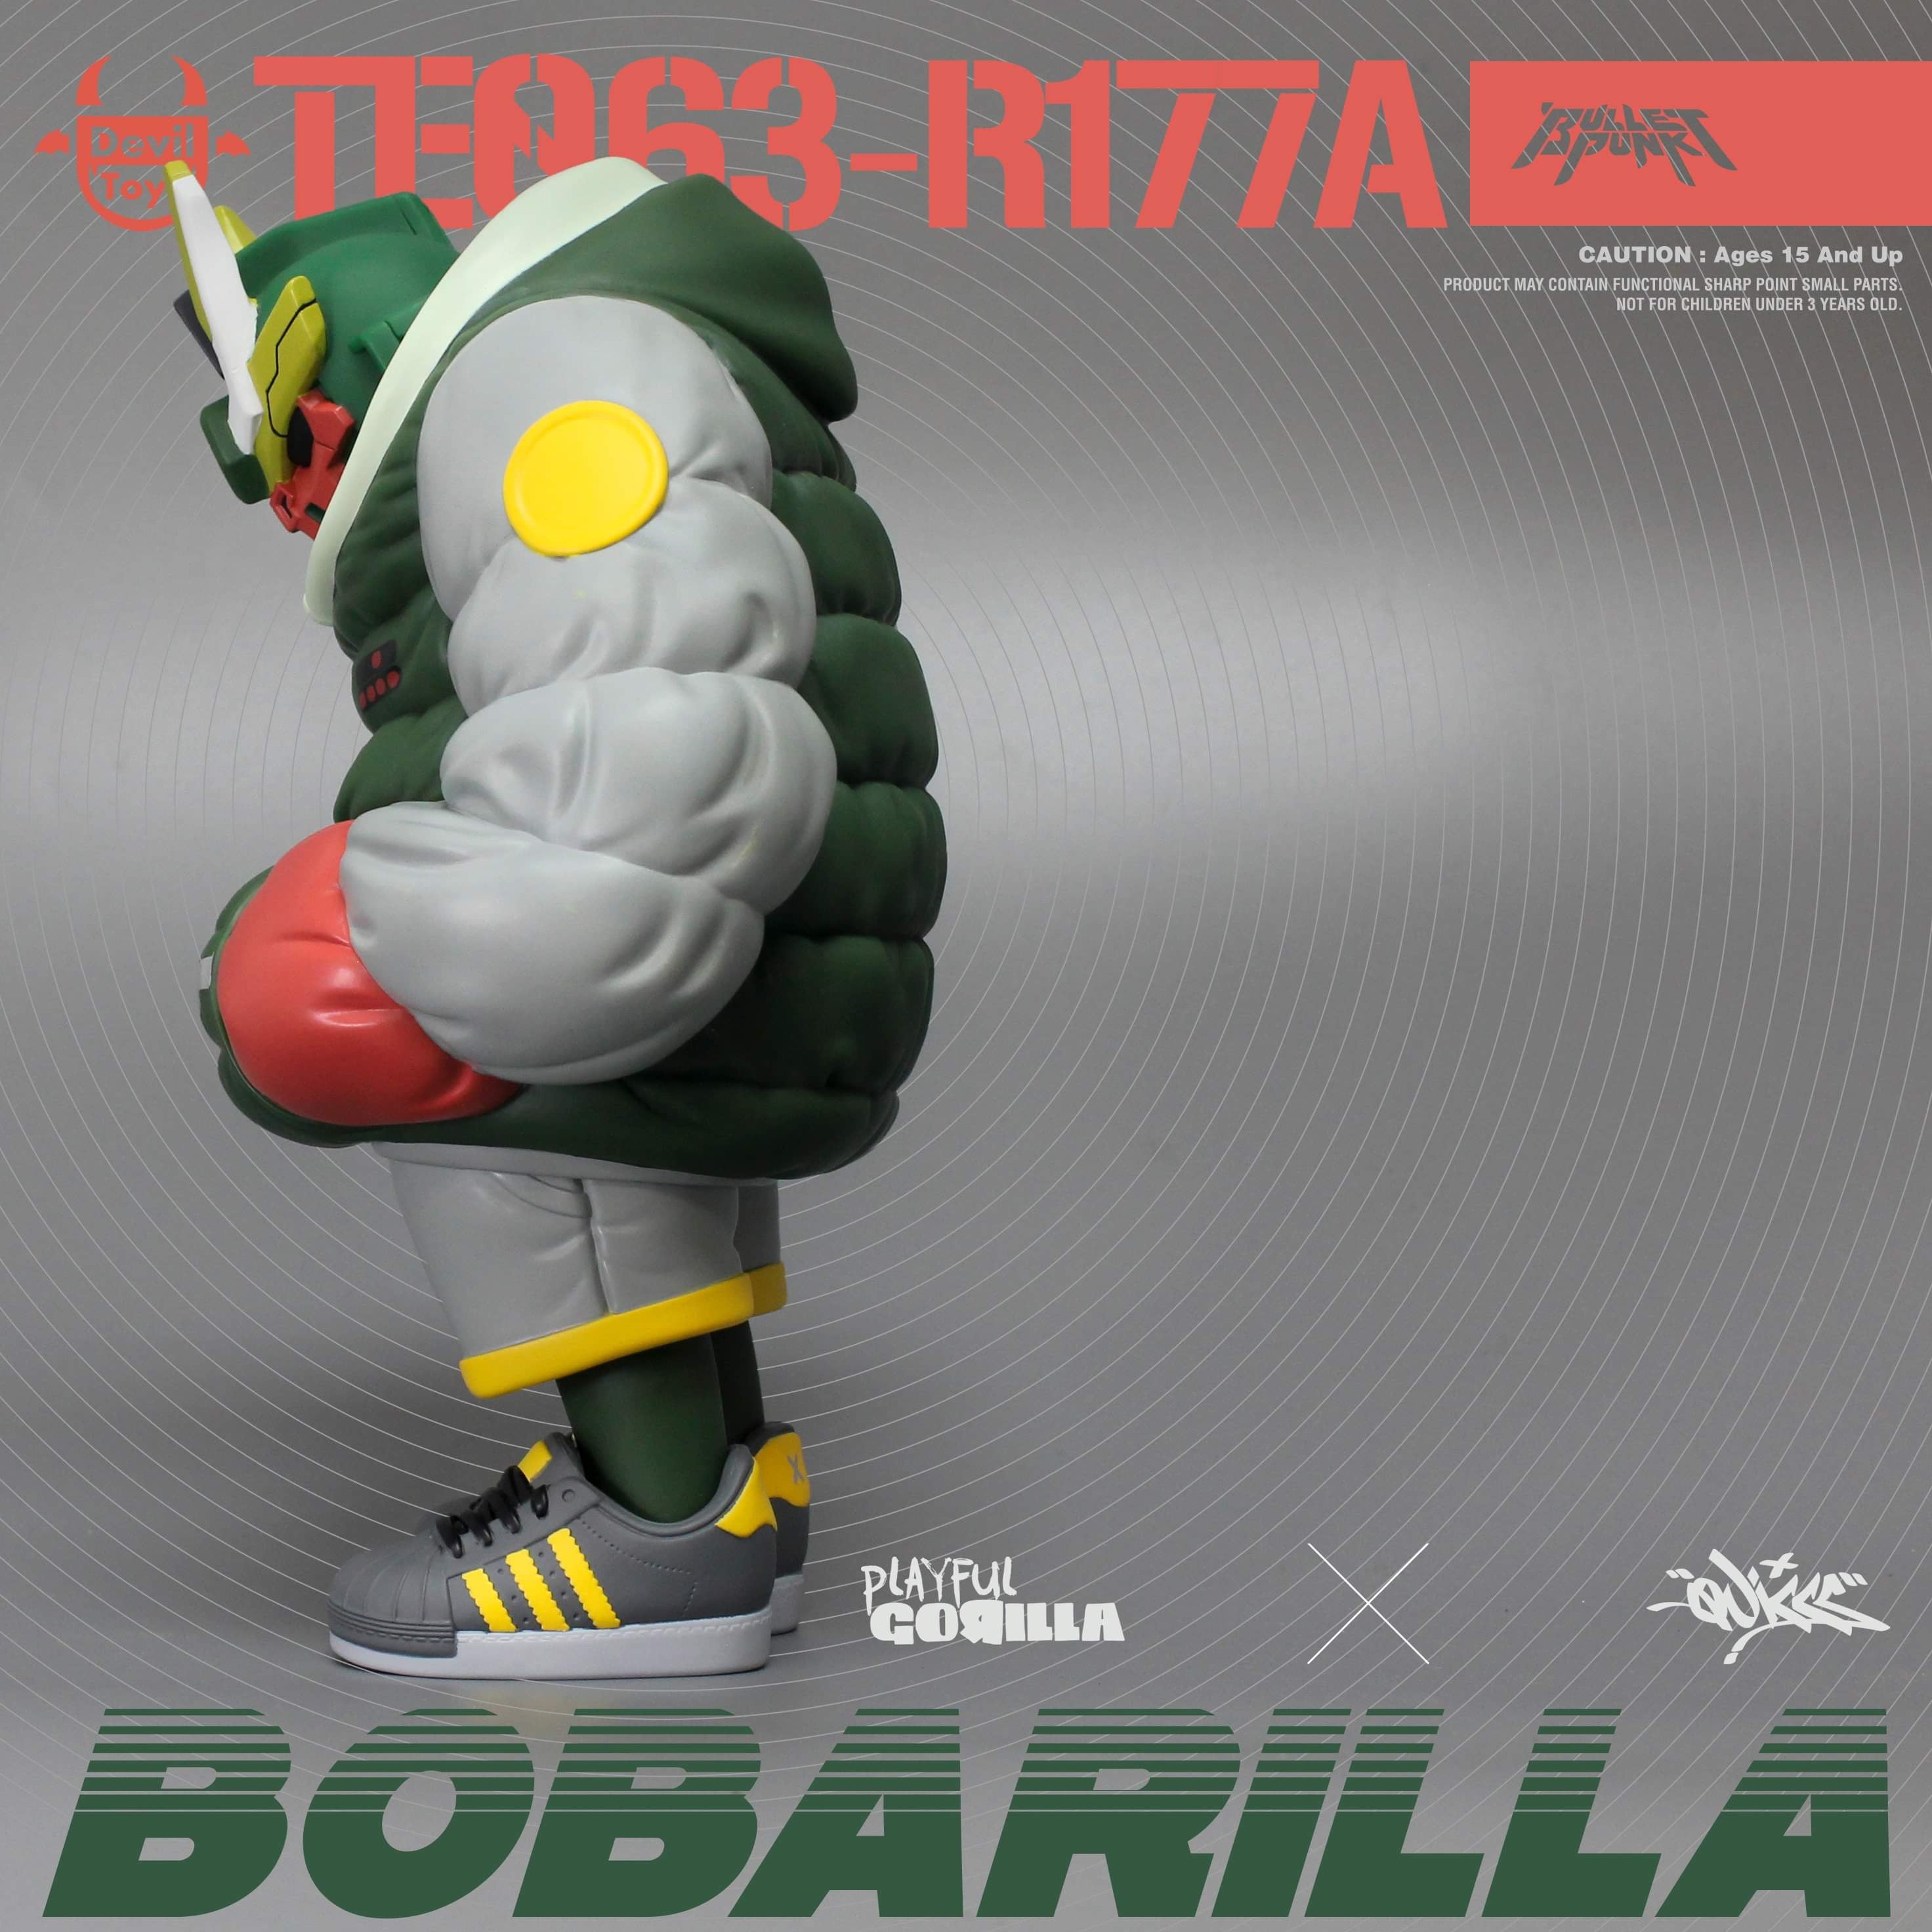 TEQ63 - R177A - BOBARILLA by Quiccs x Playful Gorilla x Devil Toys